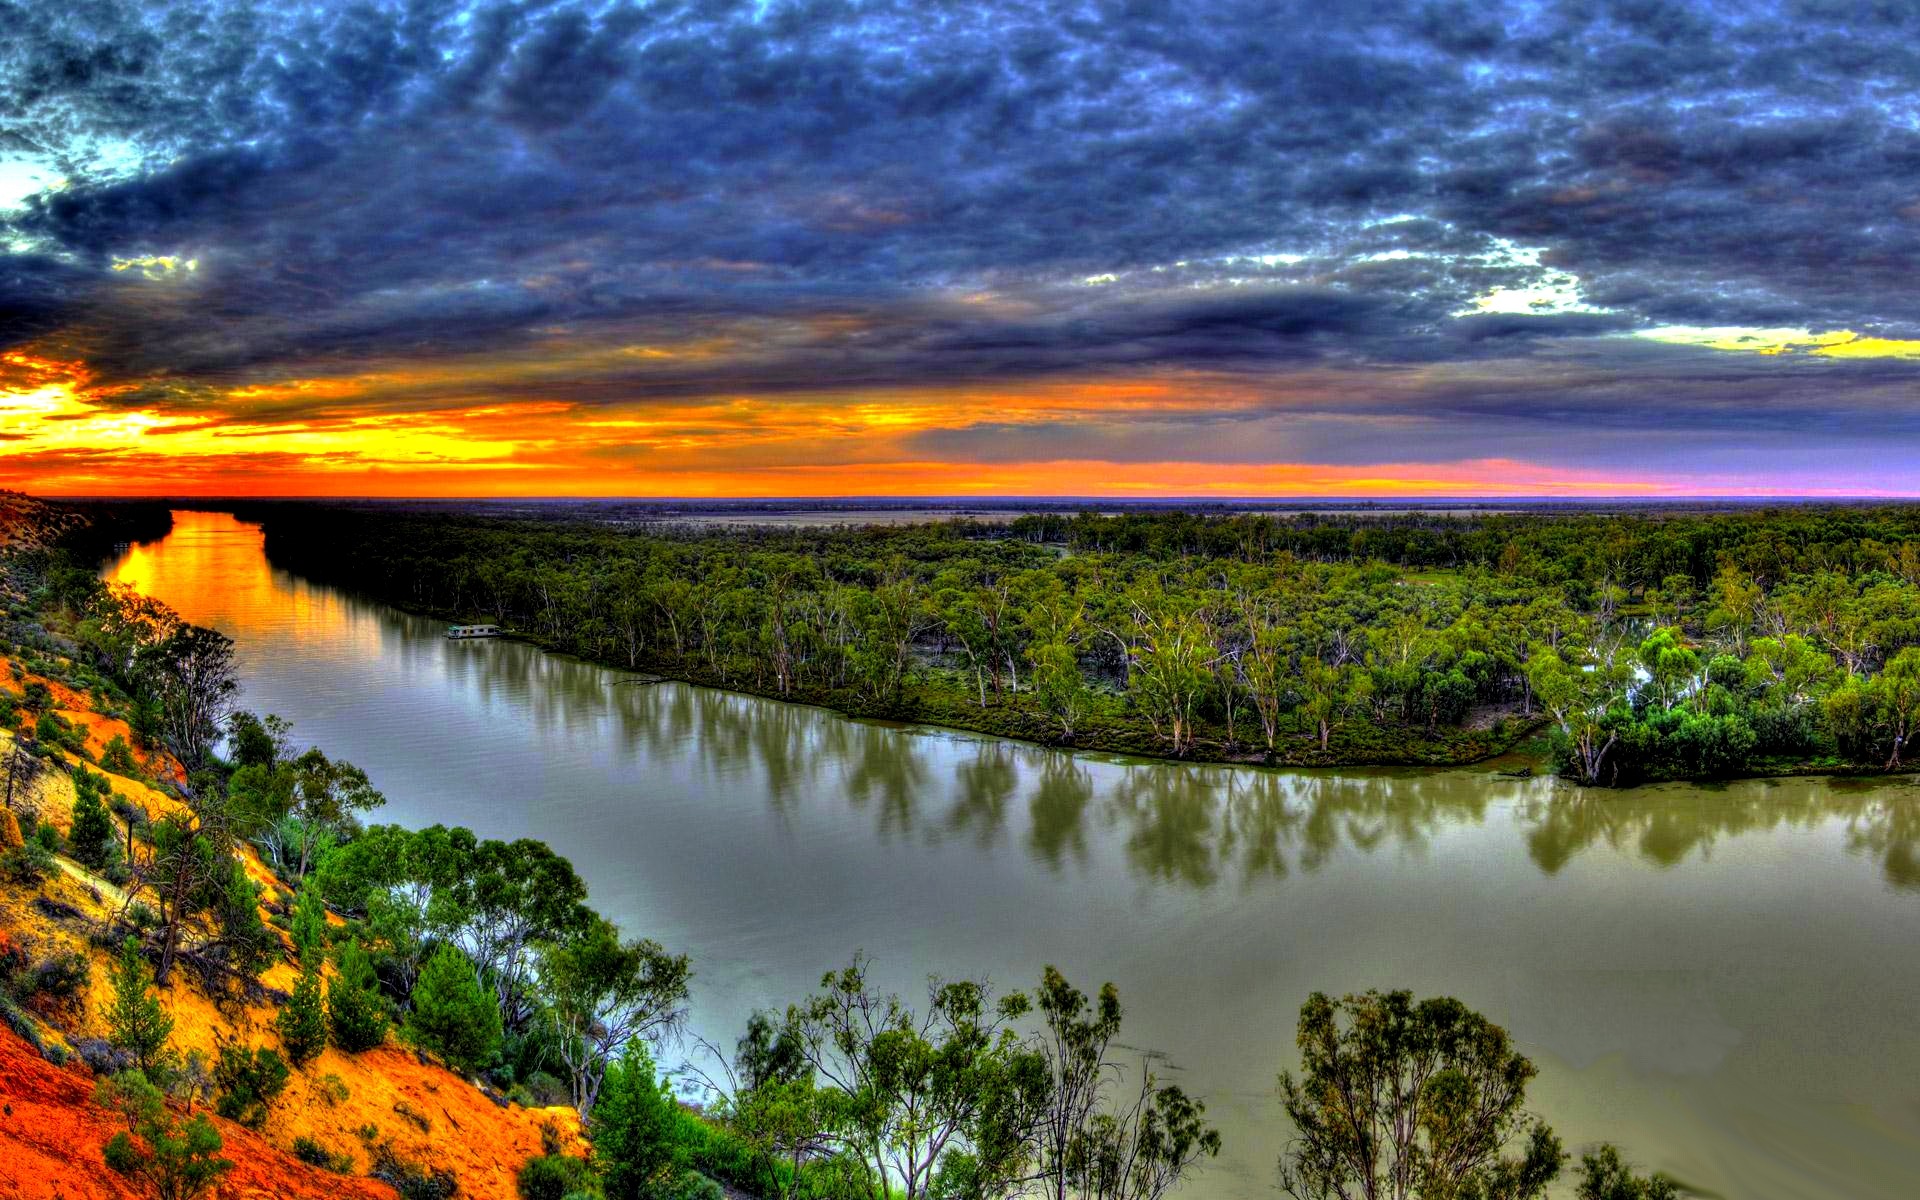 Австралия направление рек. Река Муррей (Марри). Река Муррей в Австралии. Река Муррей,река Дарлинг. Муррей и Дарлинг.